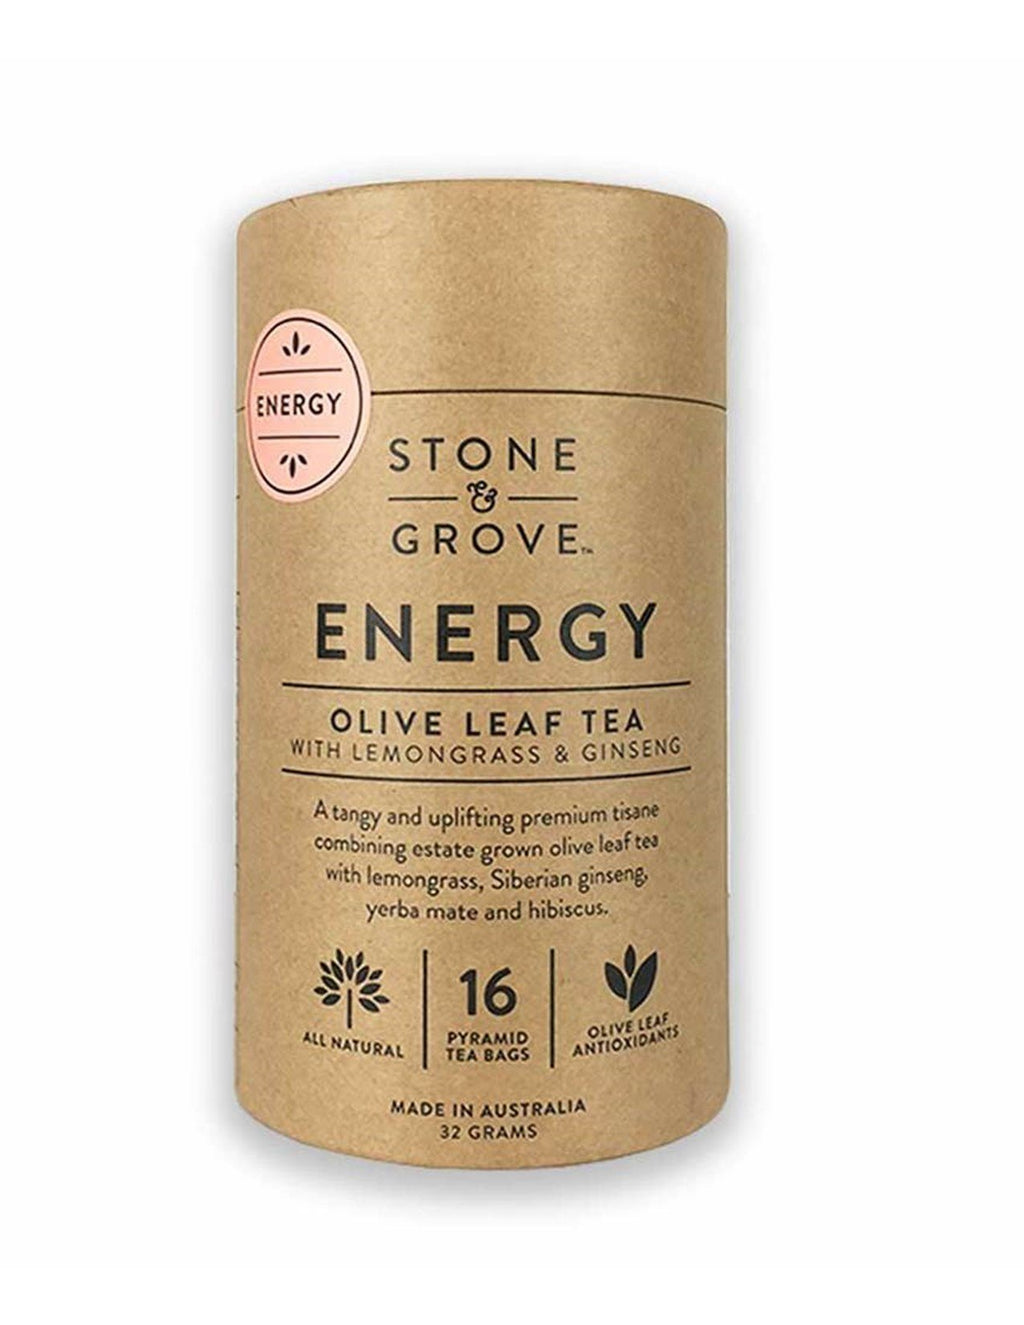 Stone and Grove Energy Olive Leaf Tea